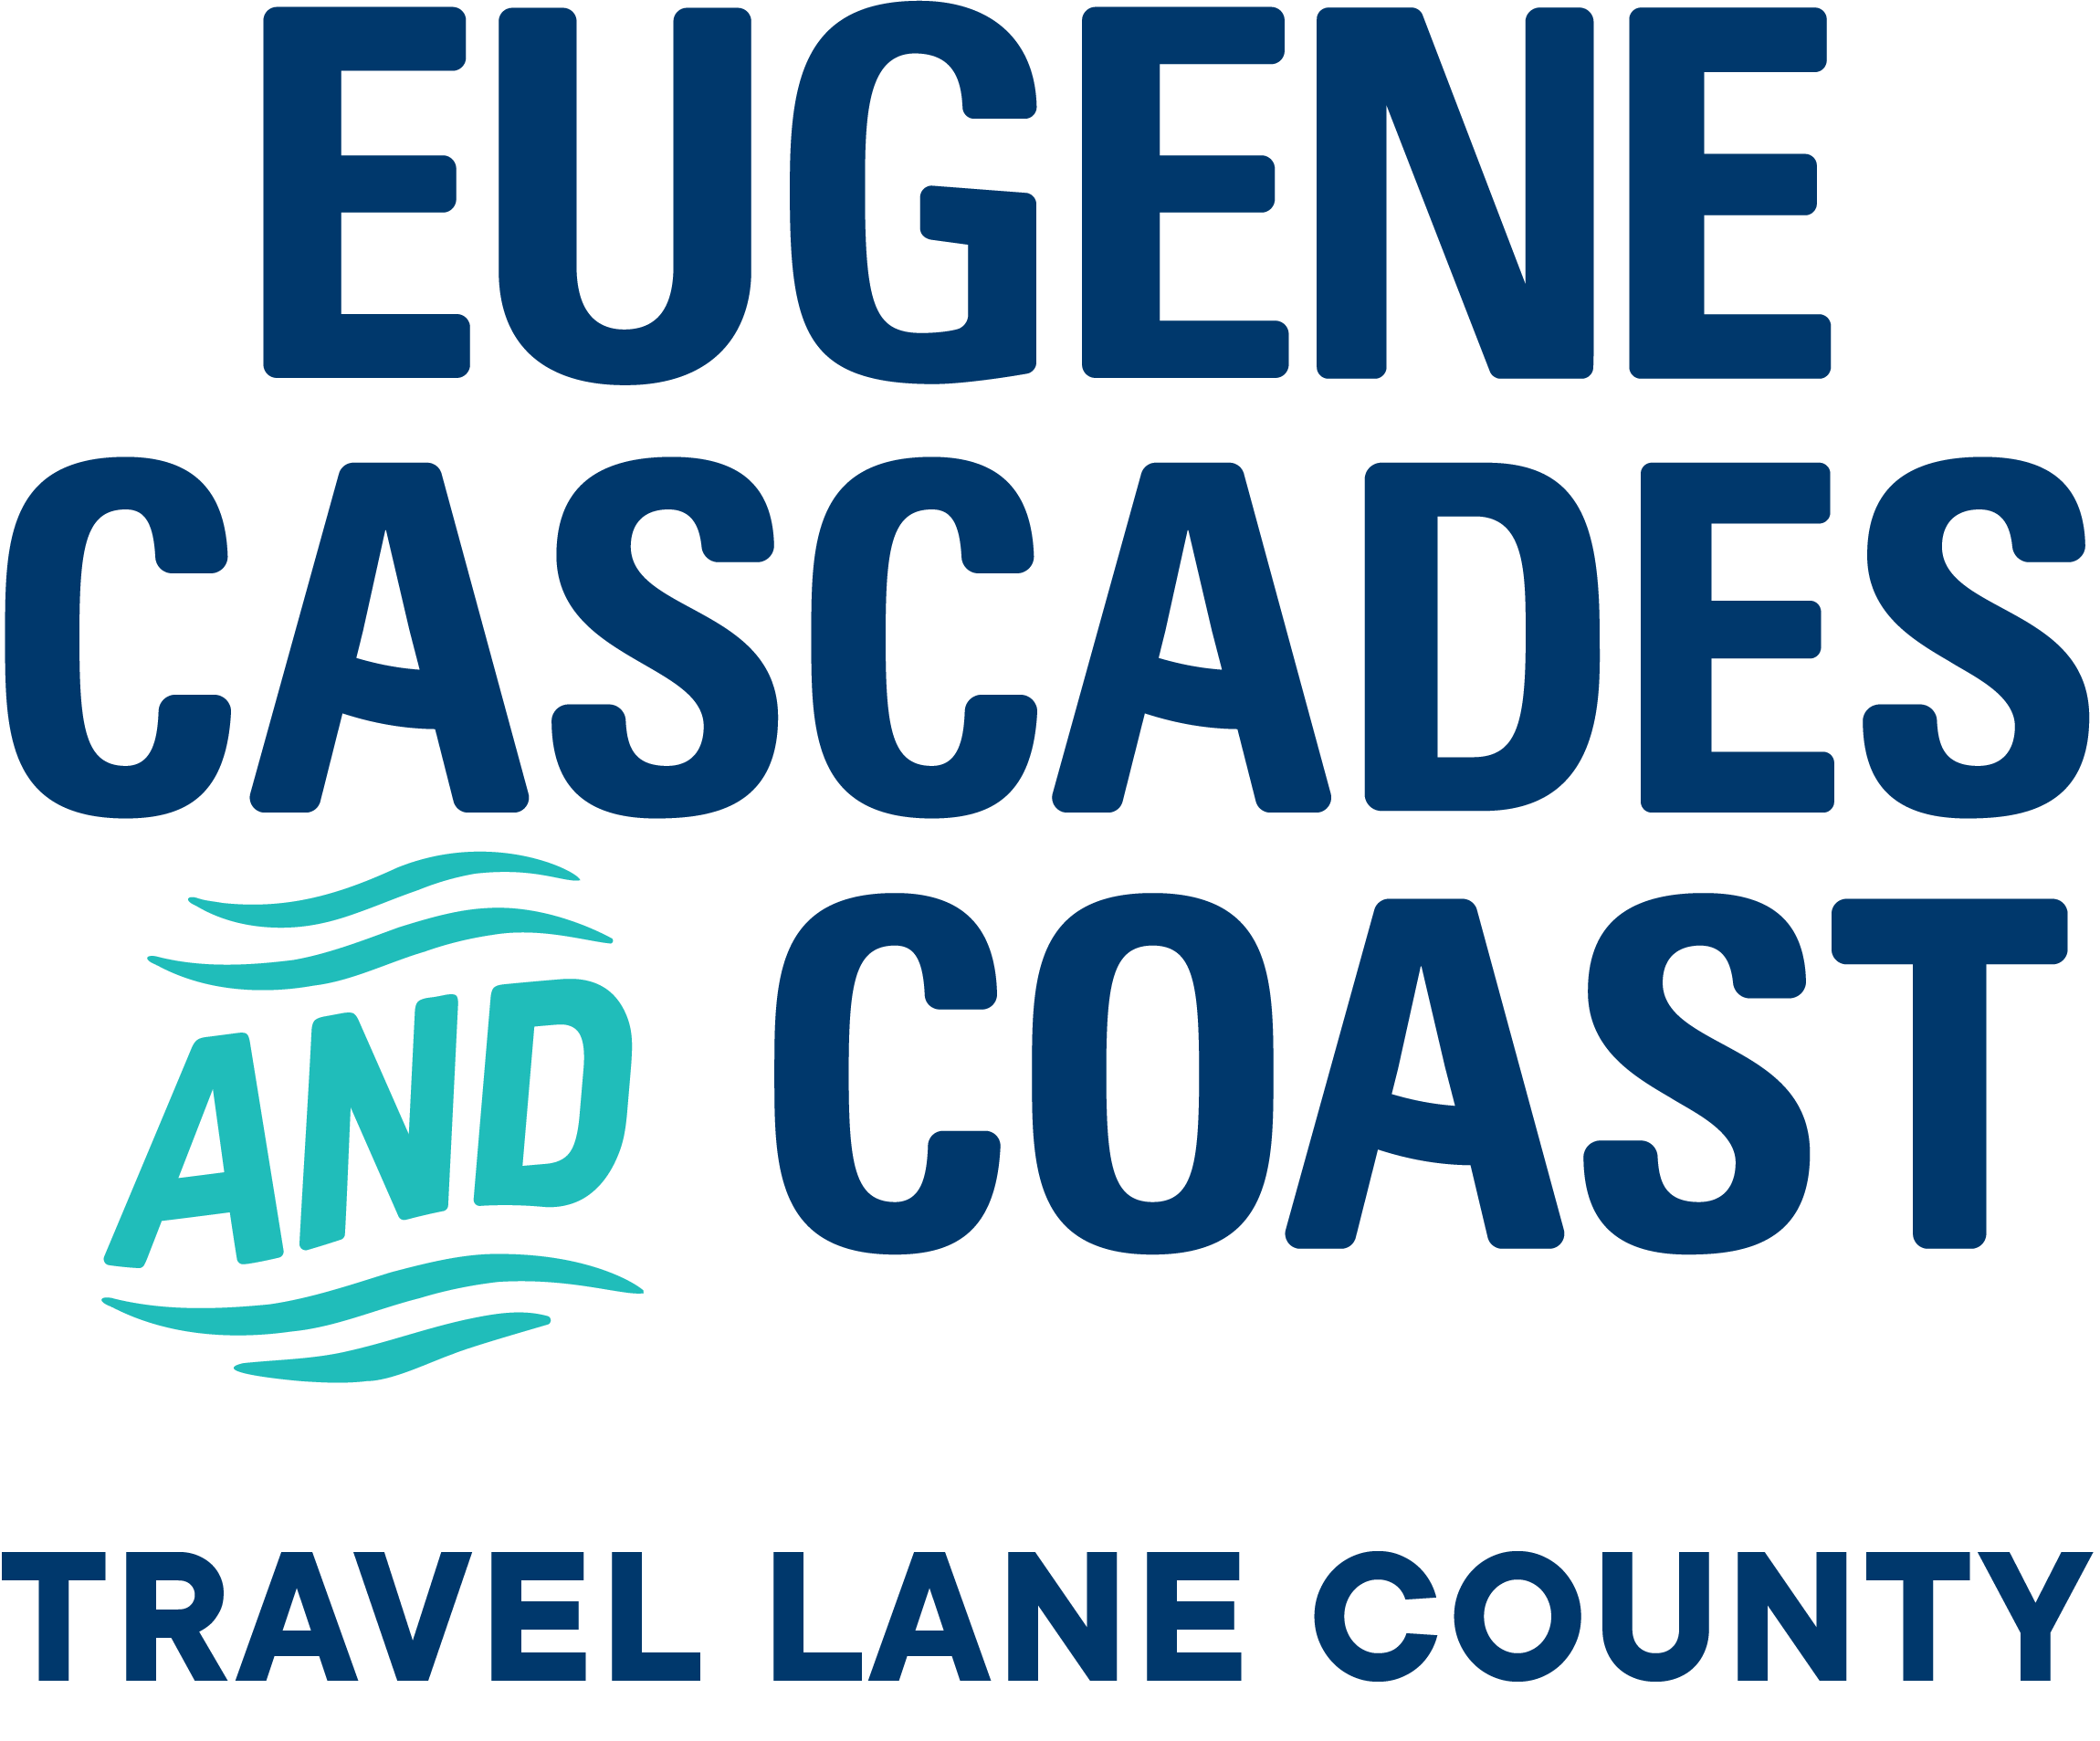 Travel Lane County